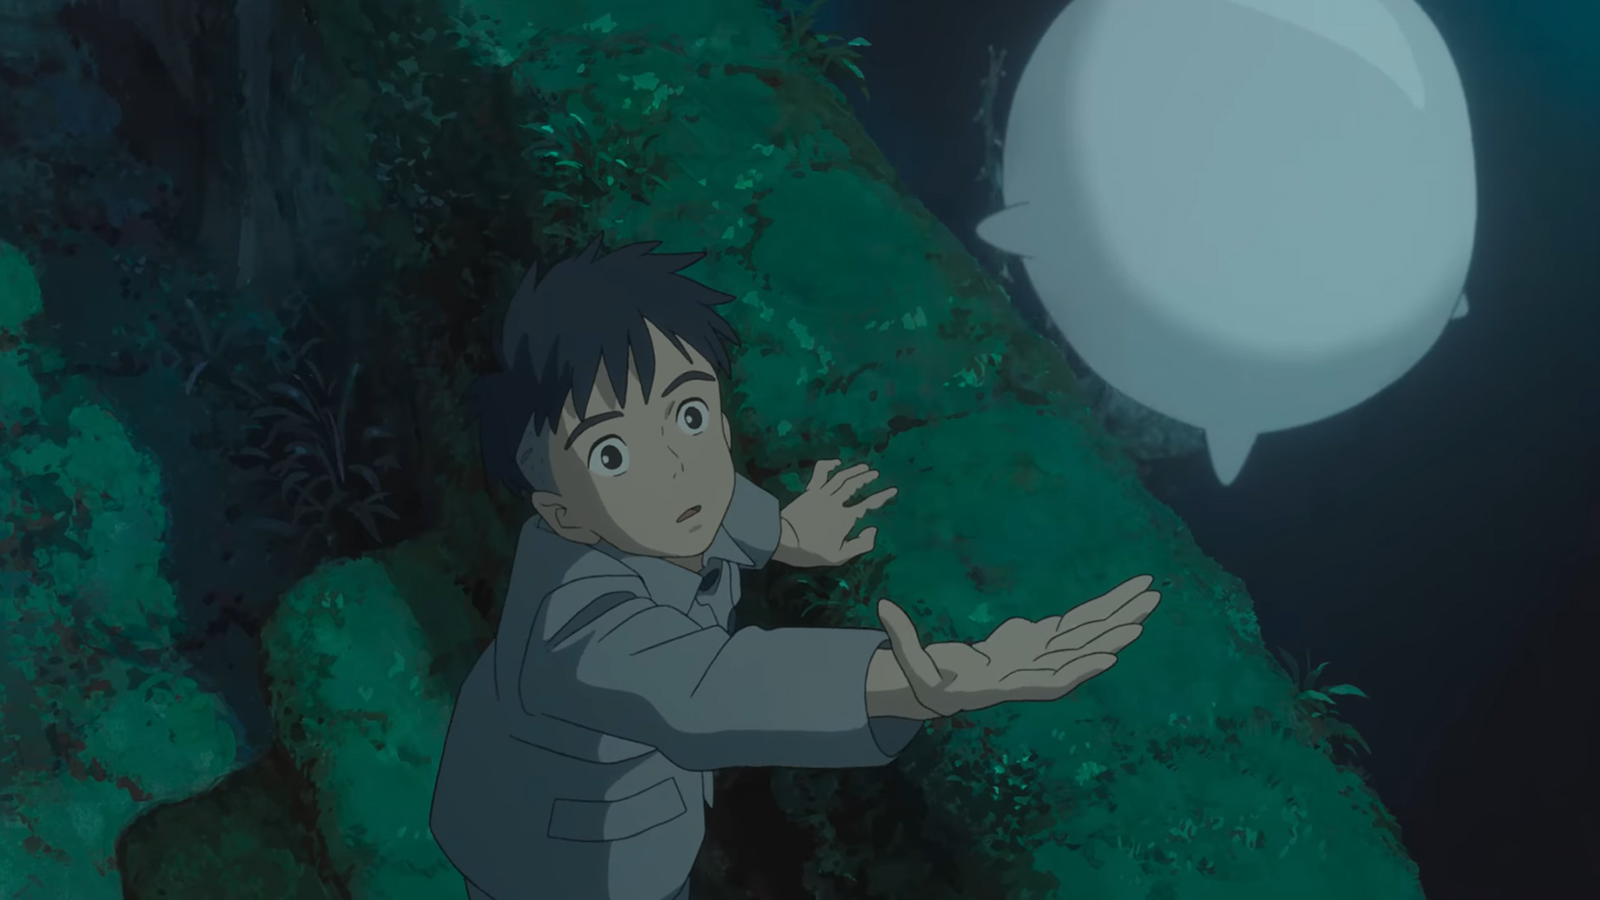 The Boy and the Heron Studio Ghibli movie: VAs, story & more